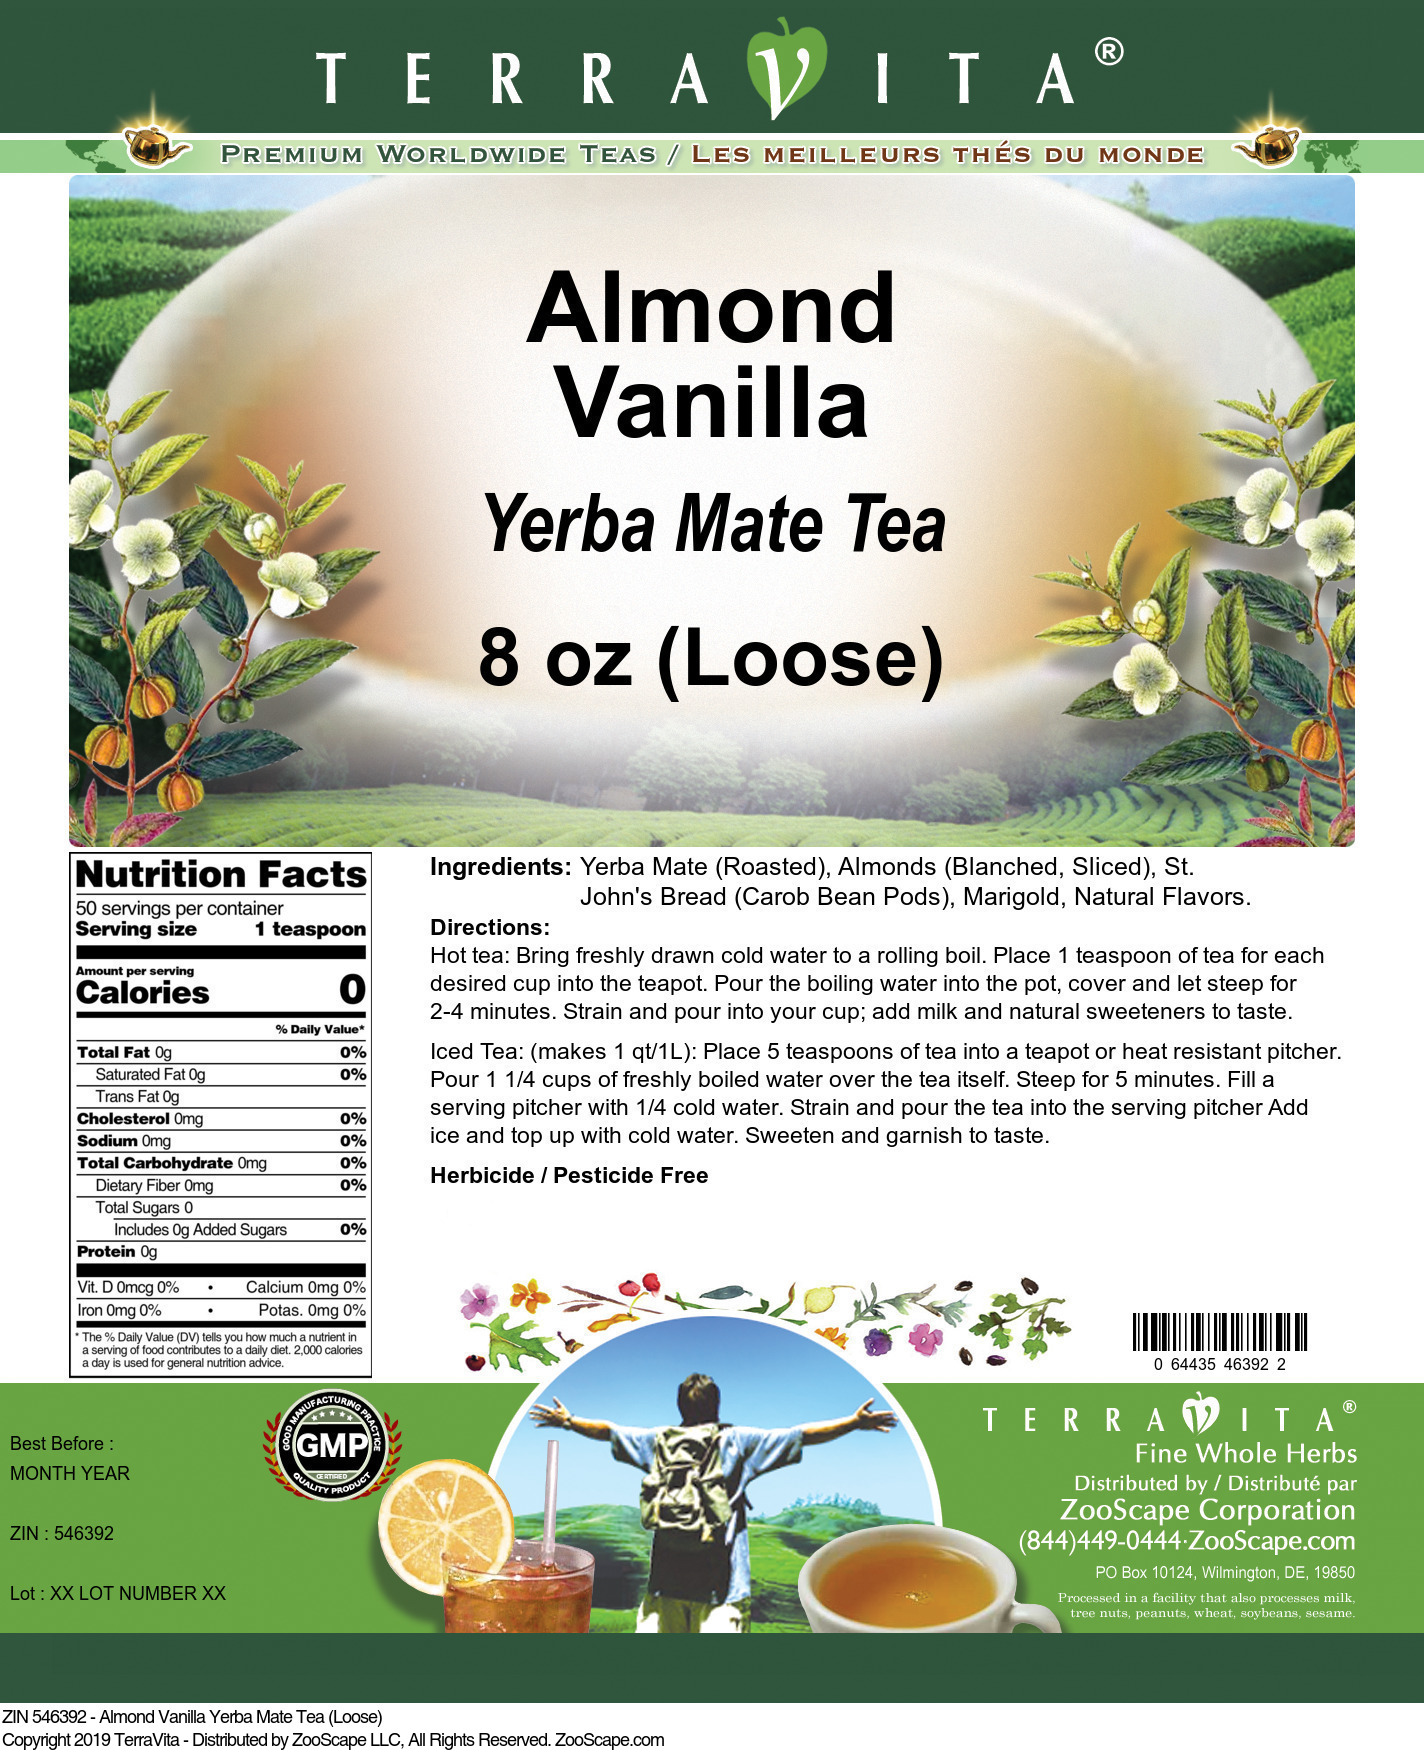 Almond Vanilla Yerba Mate Tea (Loose) - Label